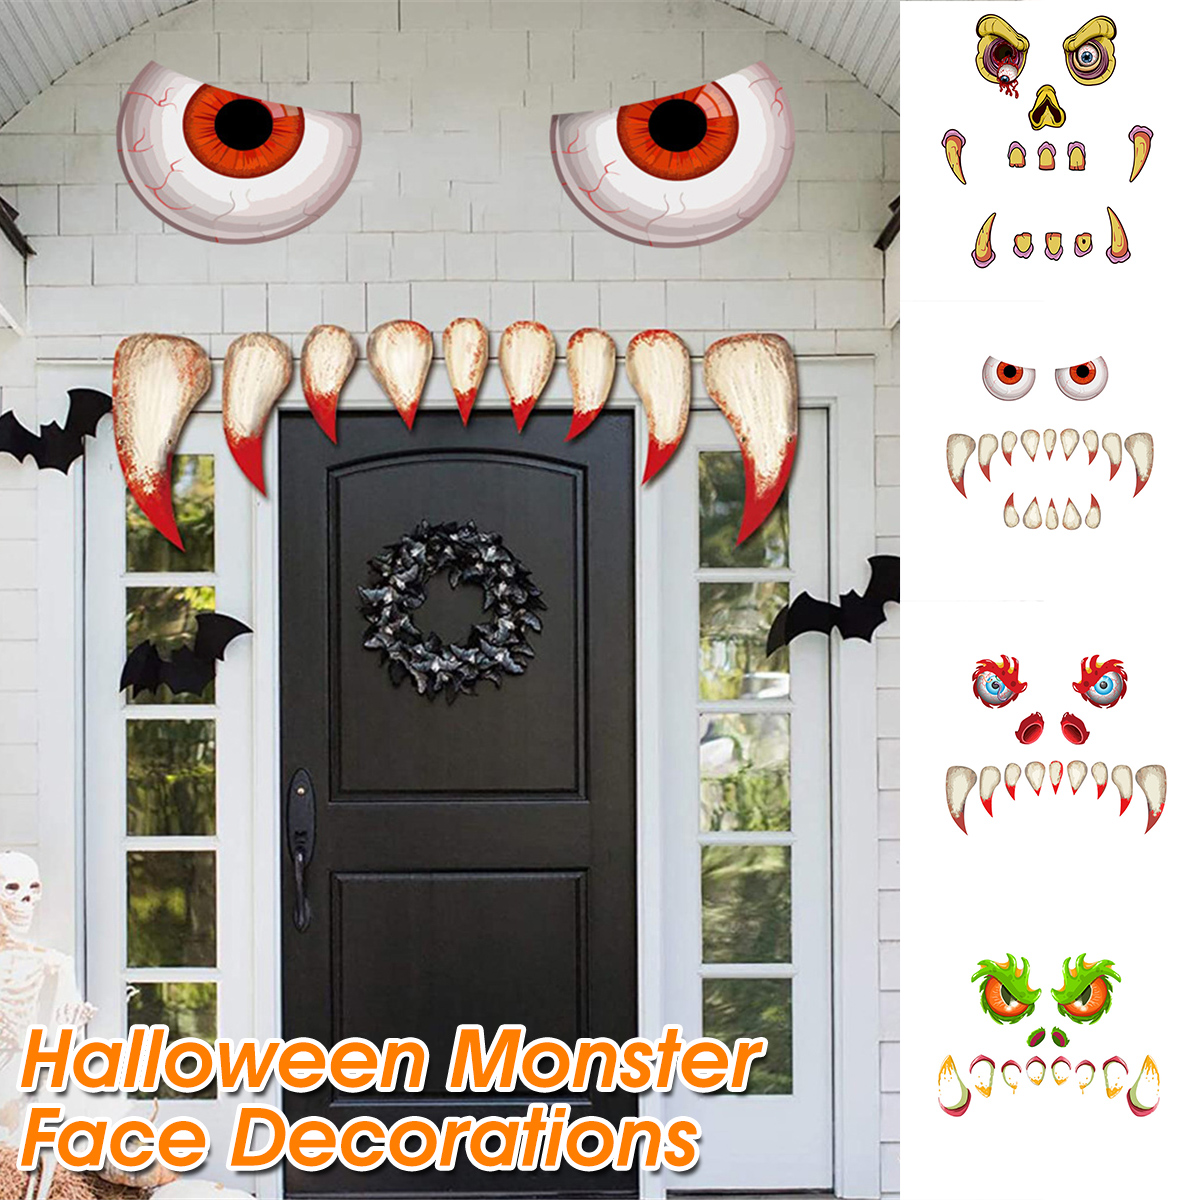 Halloween-Scary-Monster-Face-Devil-with-Eyes-Teeth-Cutouts-Combination-Sticker-Window-Gateway-Door-C-1795001-1